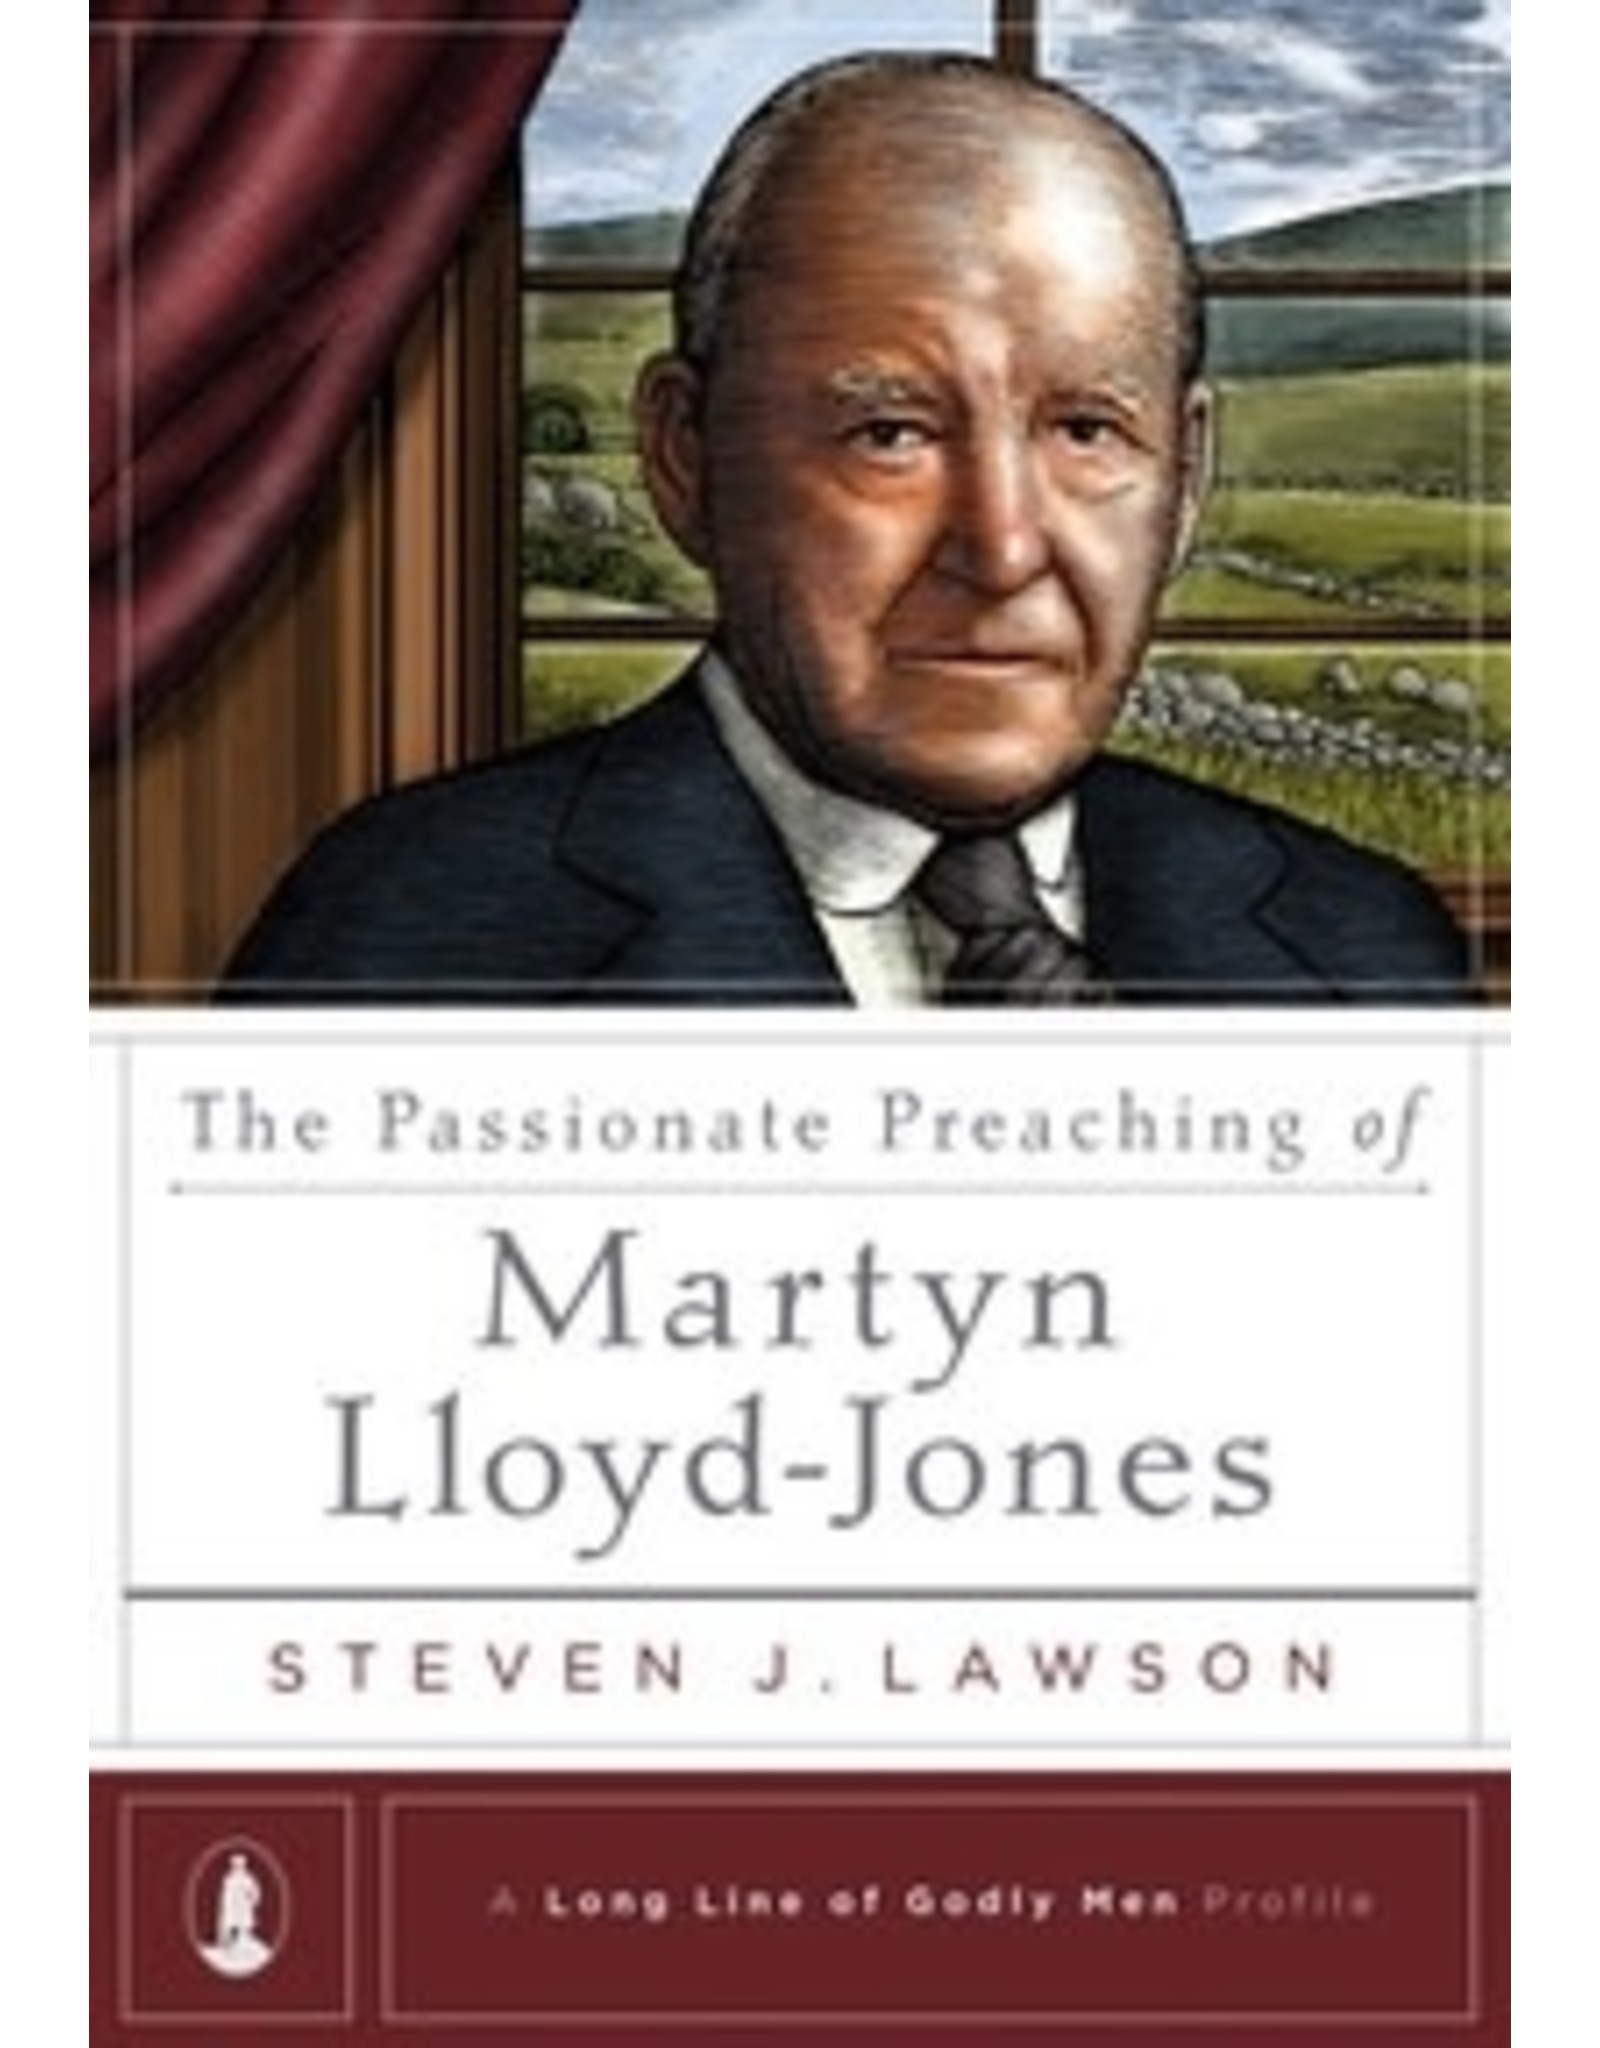 Lawson The Passionate Preaching of Martin Lloyd-Jones